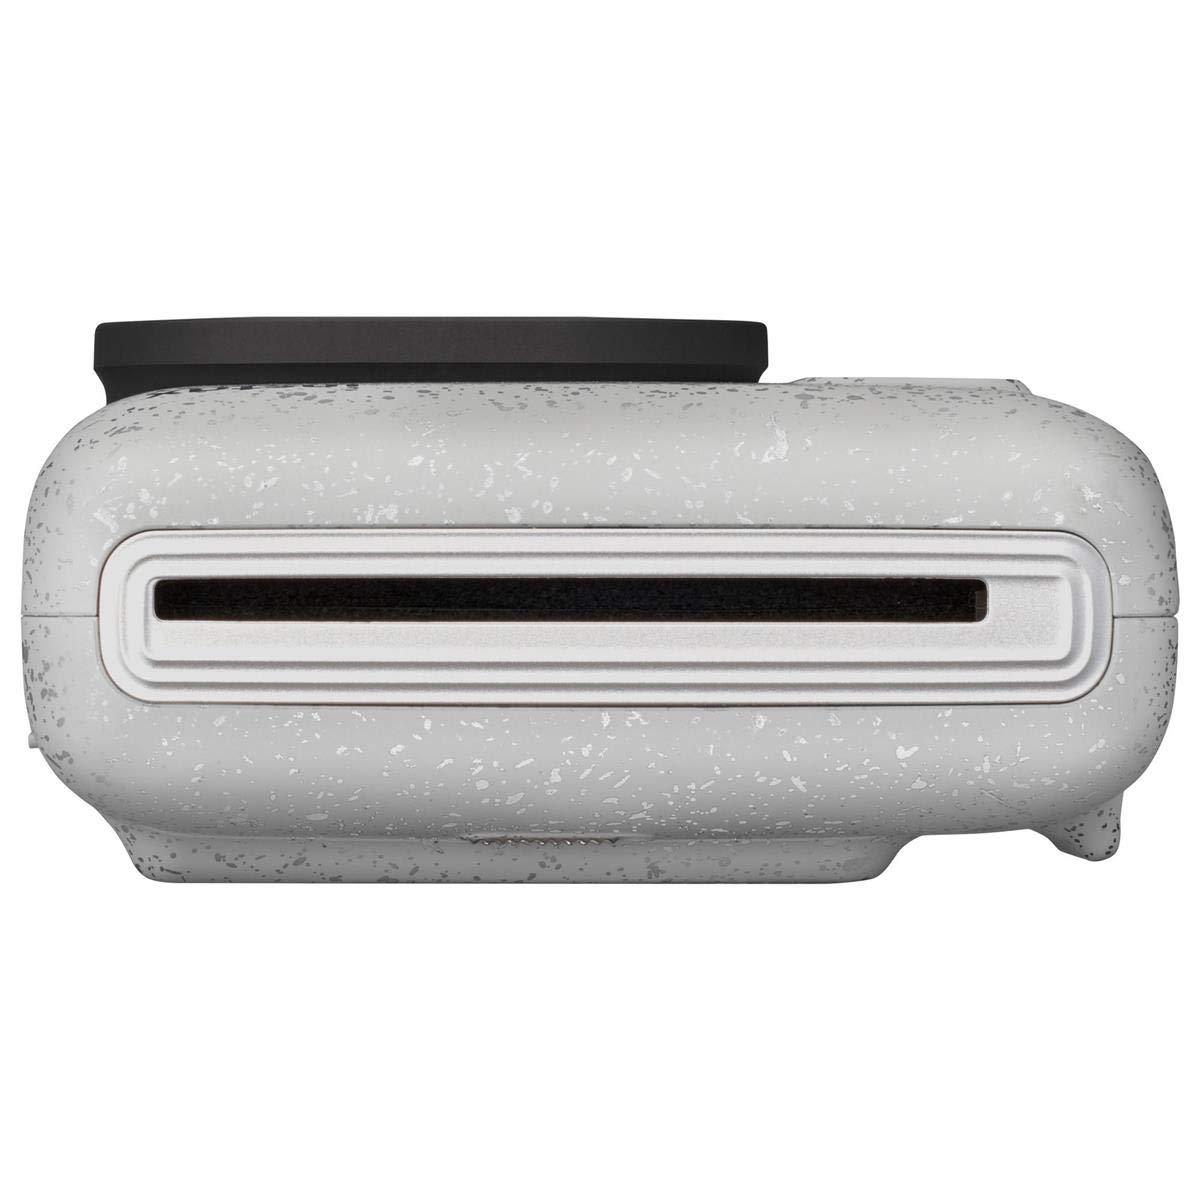 Fujifilm Instax Mini Liplay Hybrid Instant Camera - Stone White